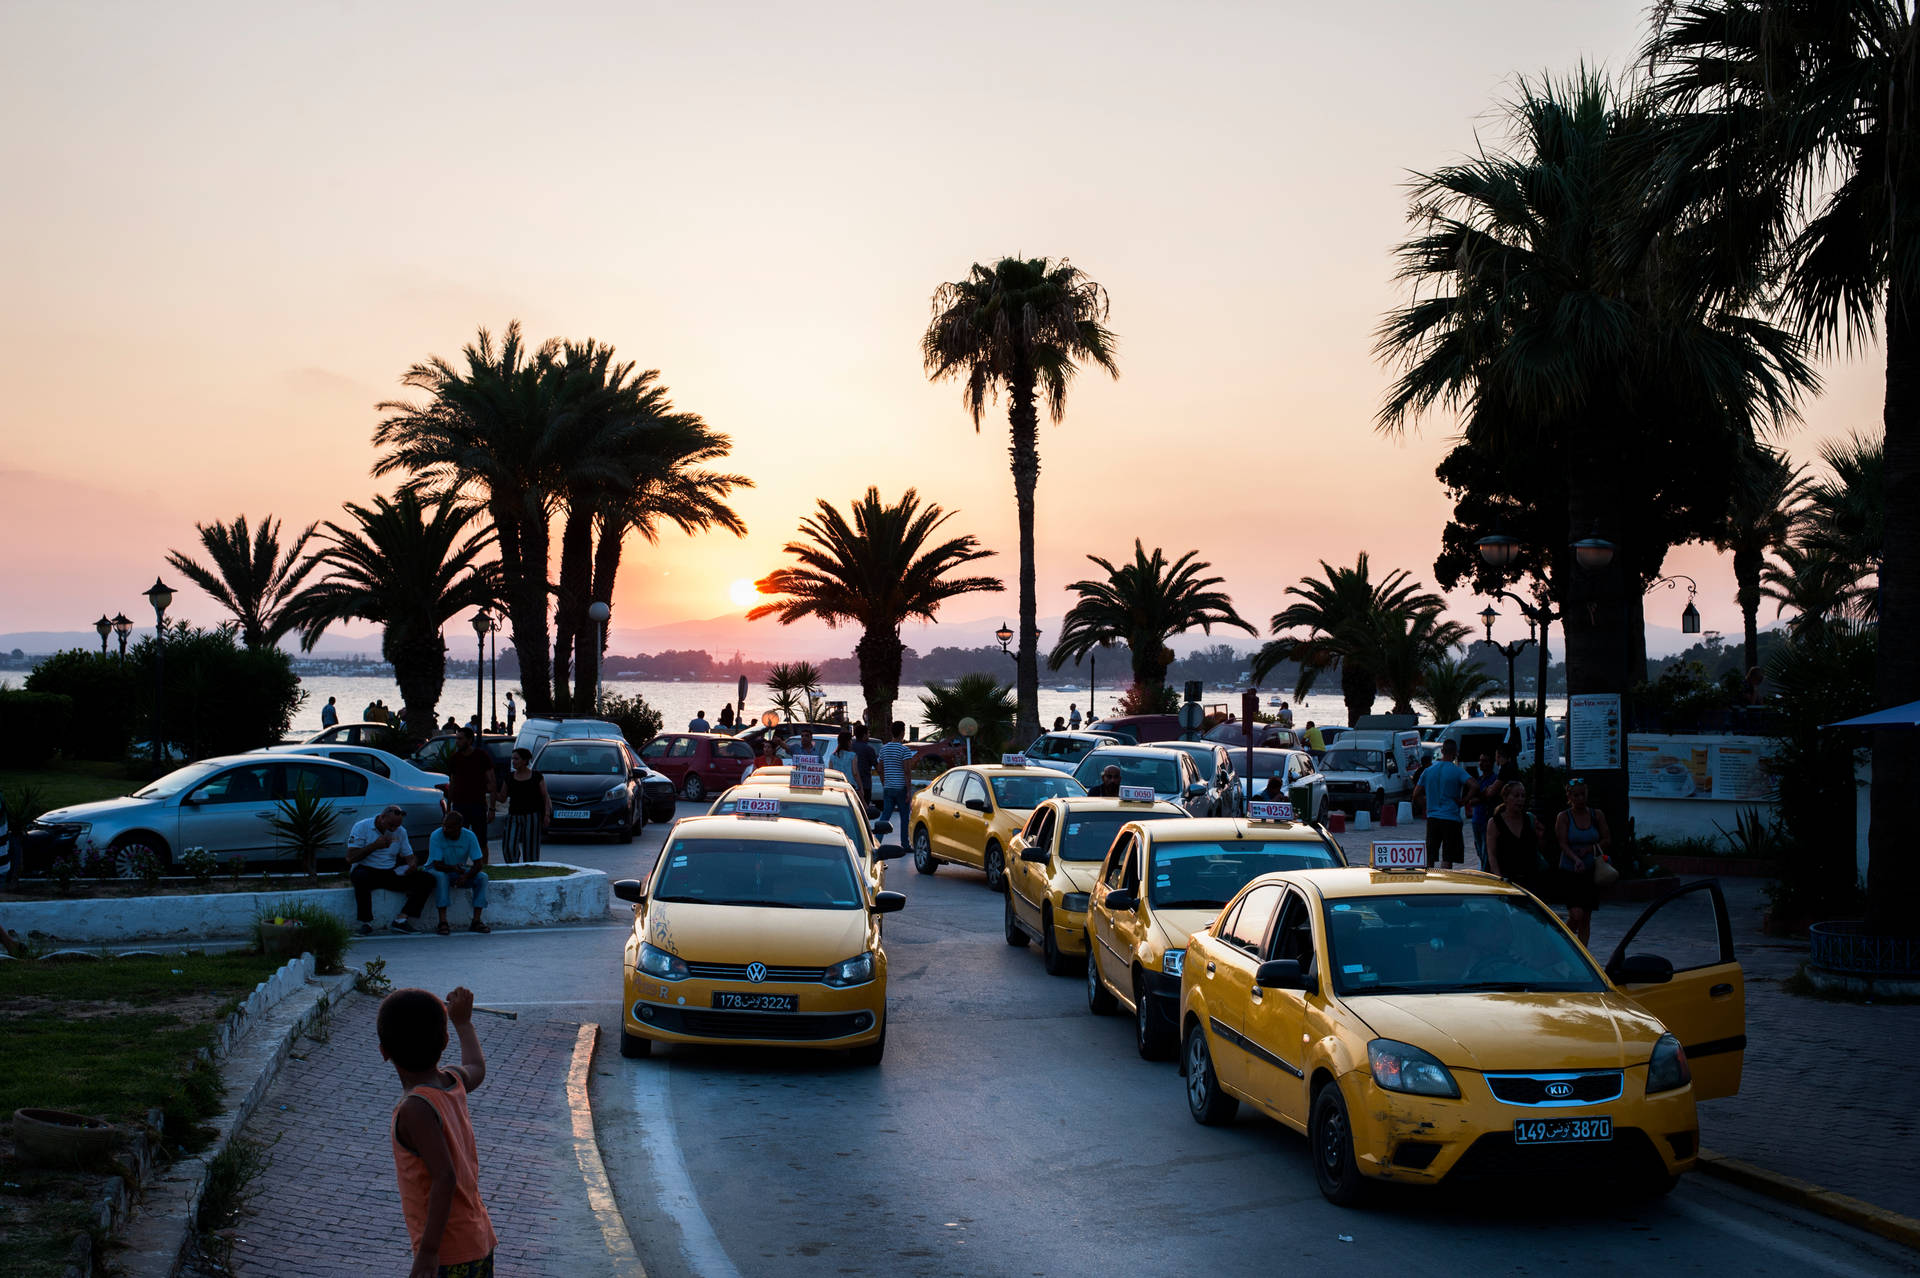 Tunisia Road Full Of Cars Wallpaper